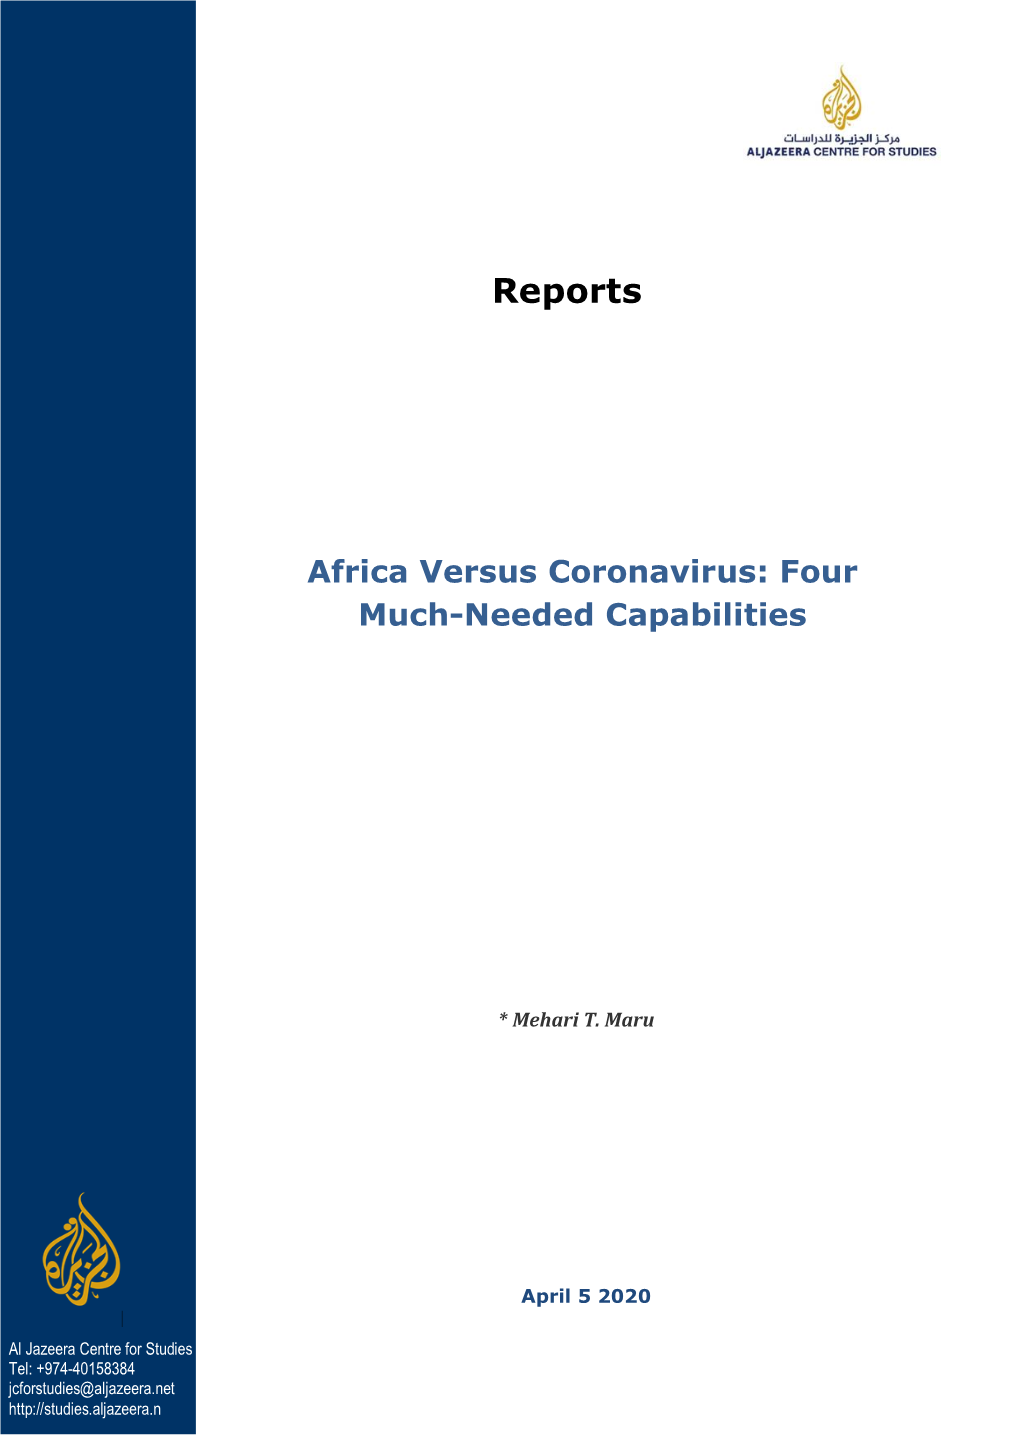 Africa Versus Coronavirus: Four Much-Needed Capabilities